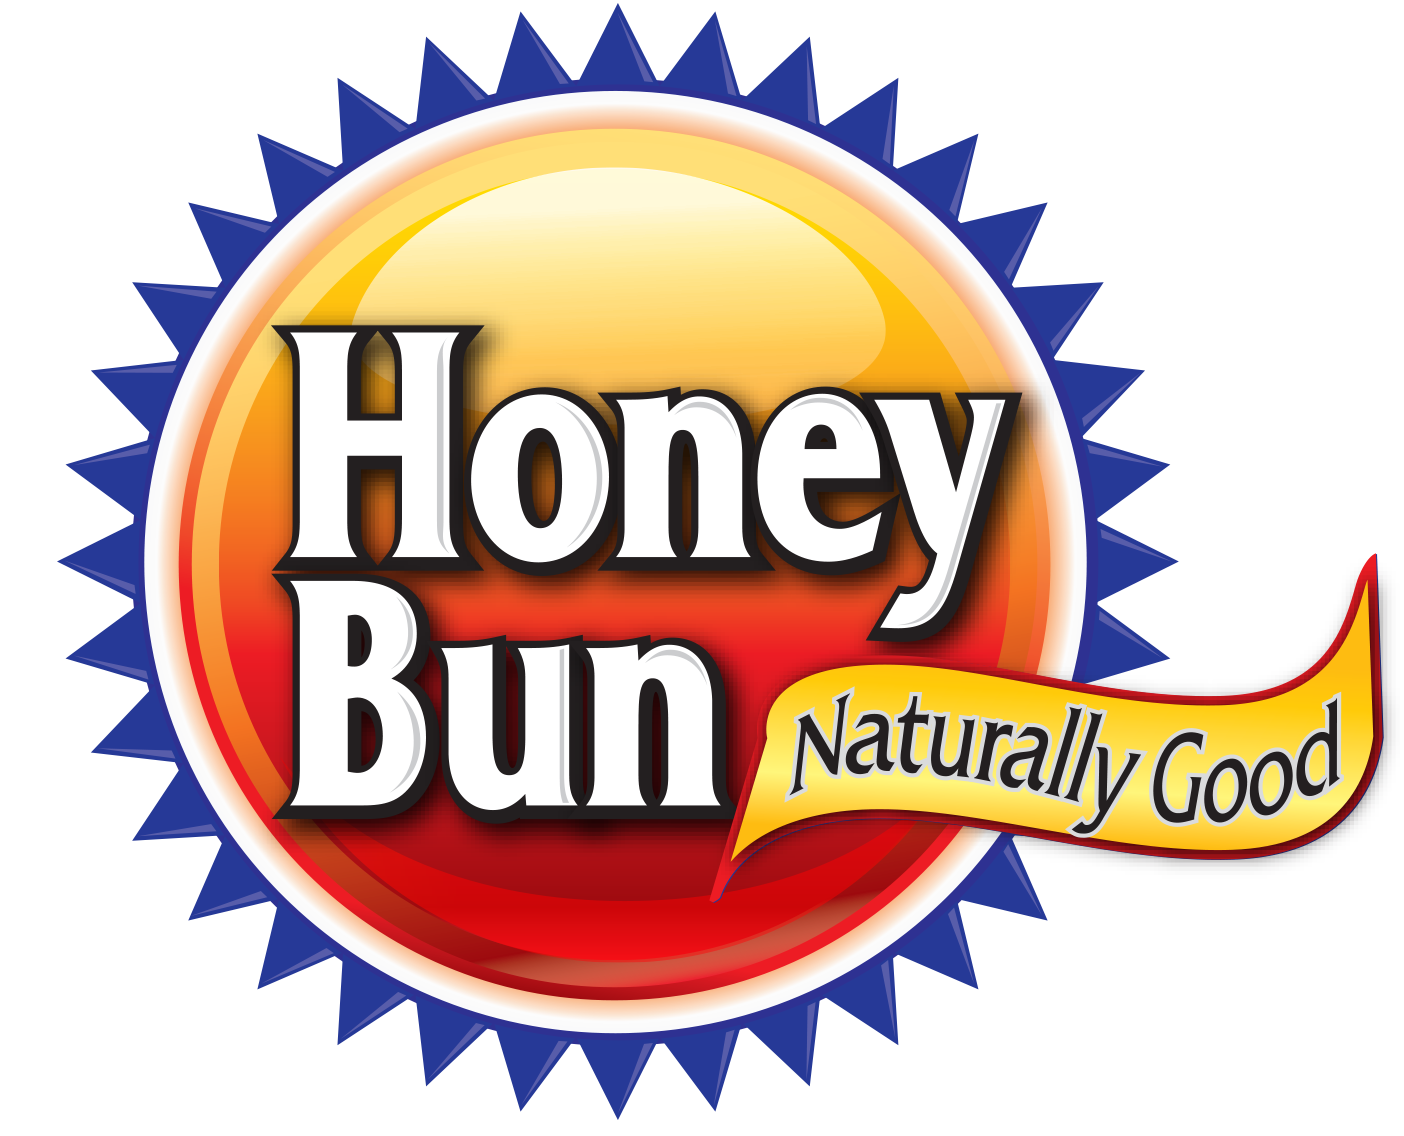 Honey Bun profit up modestly in Q3